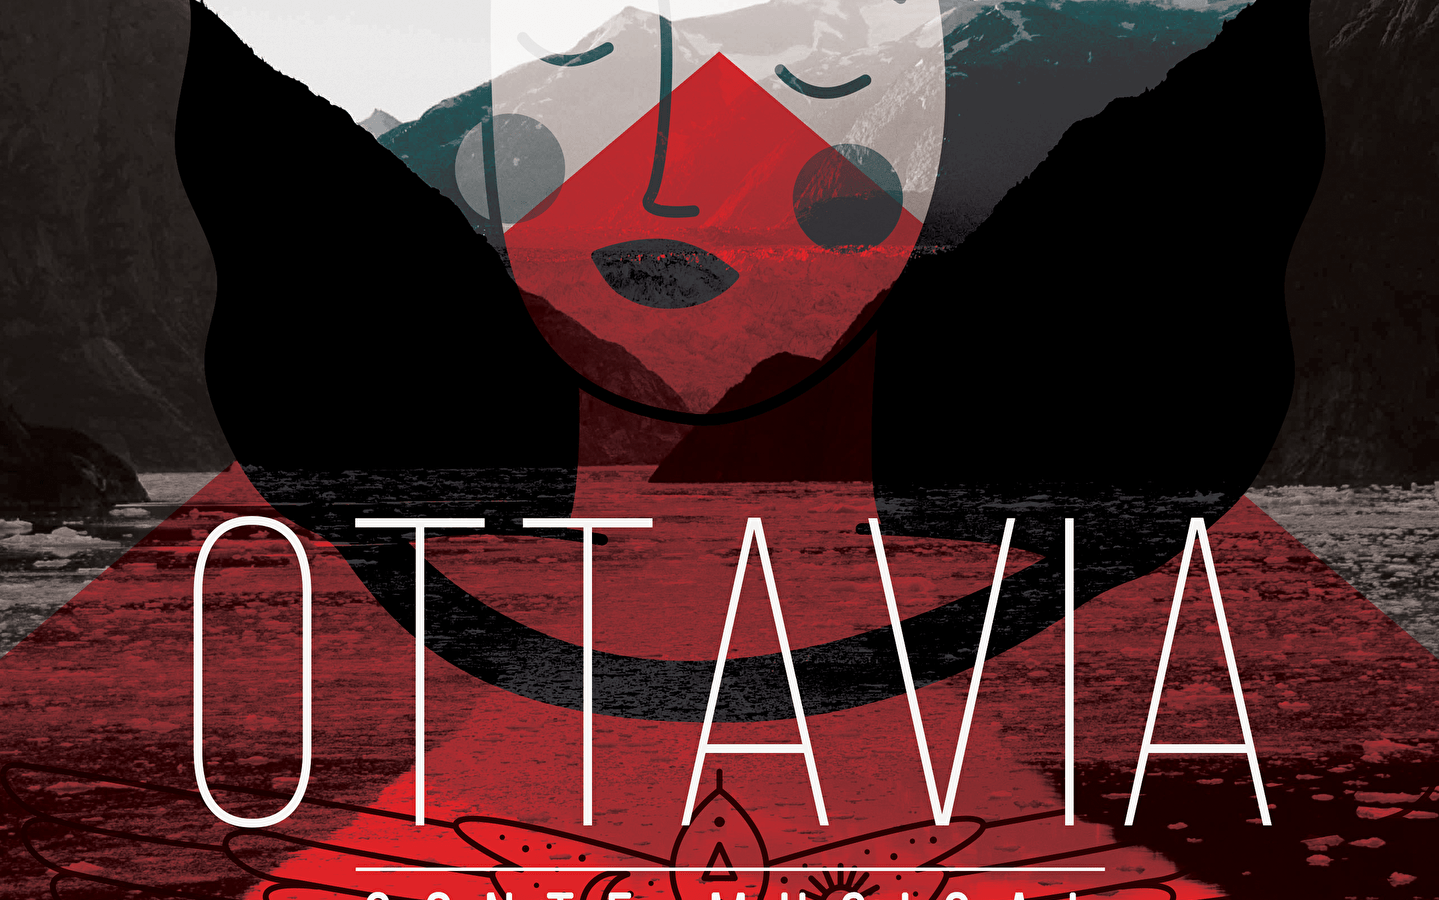 Spectacle - Ottavia